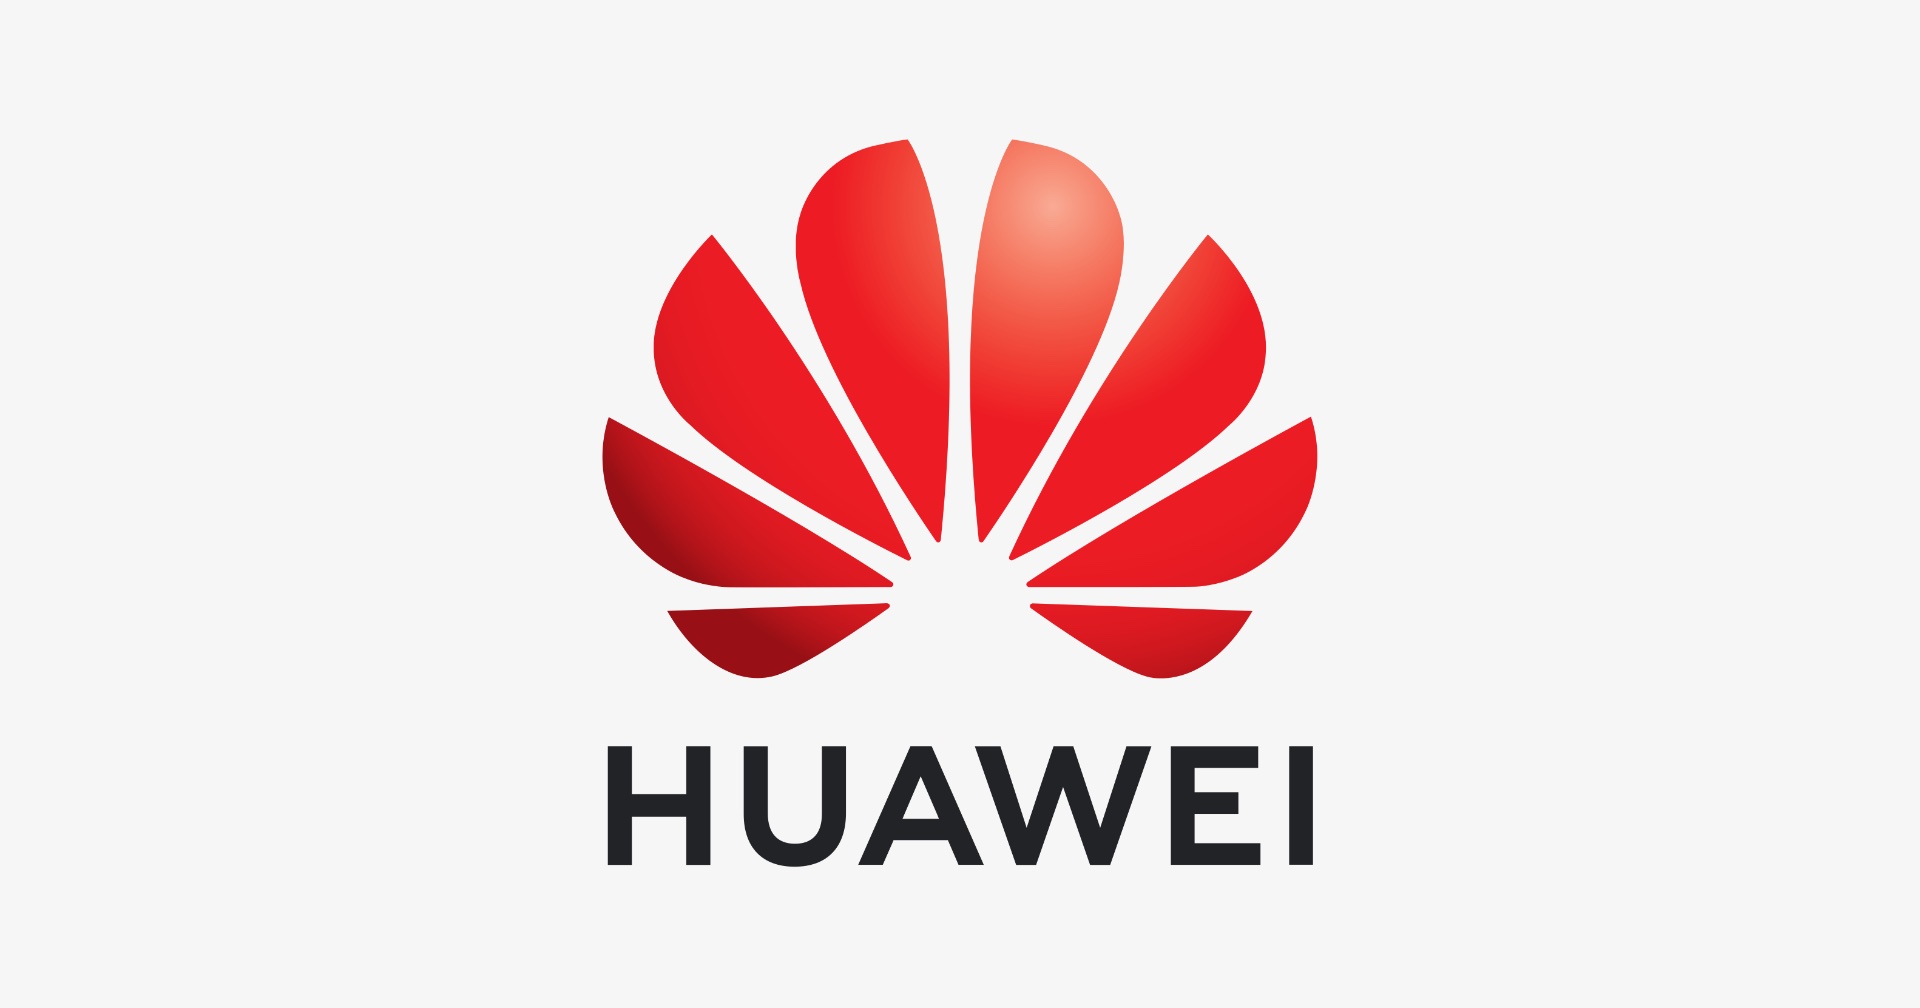 Huawei มั่นใจ การแบนของสหรัฐฯ​ จะทำให้อุตสาหกรรมชิปของจีนกลับมาผงาดอีกครั้ง